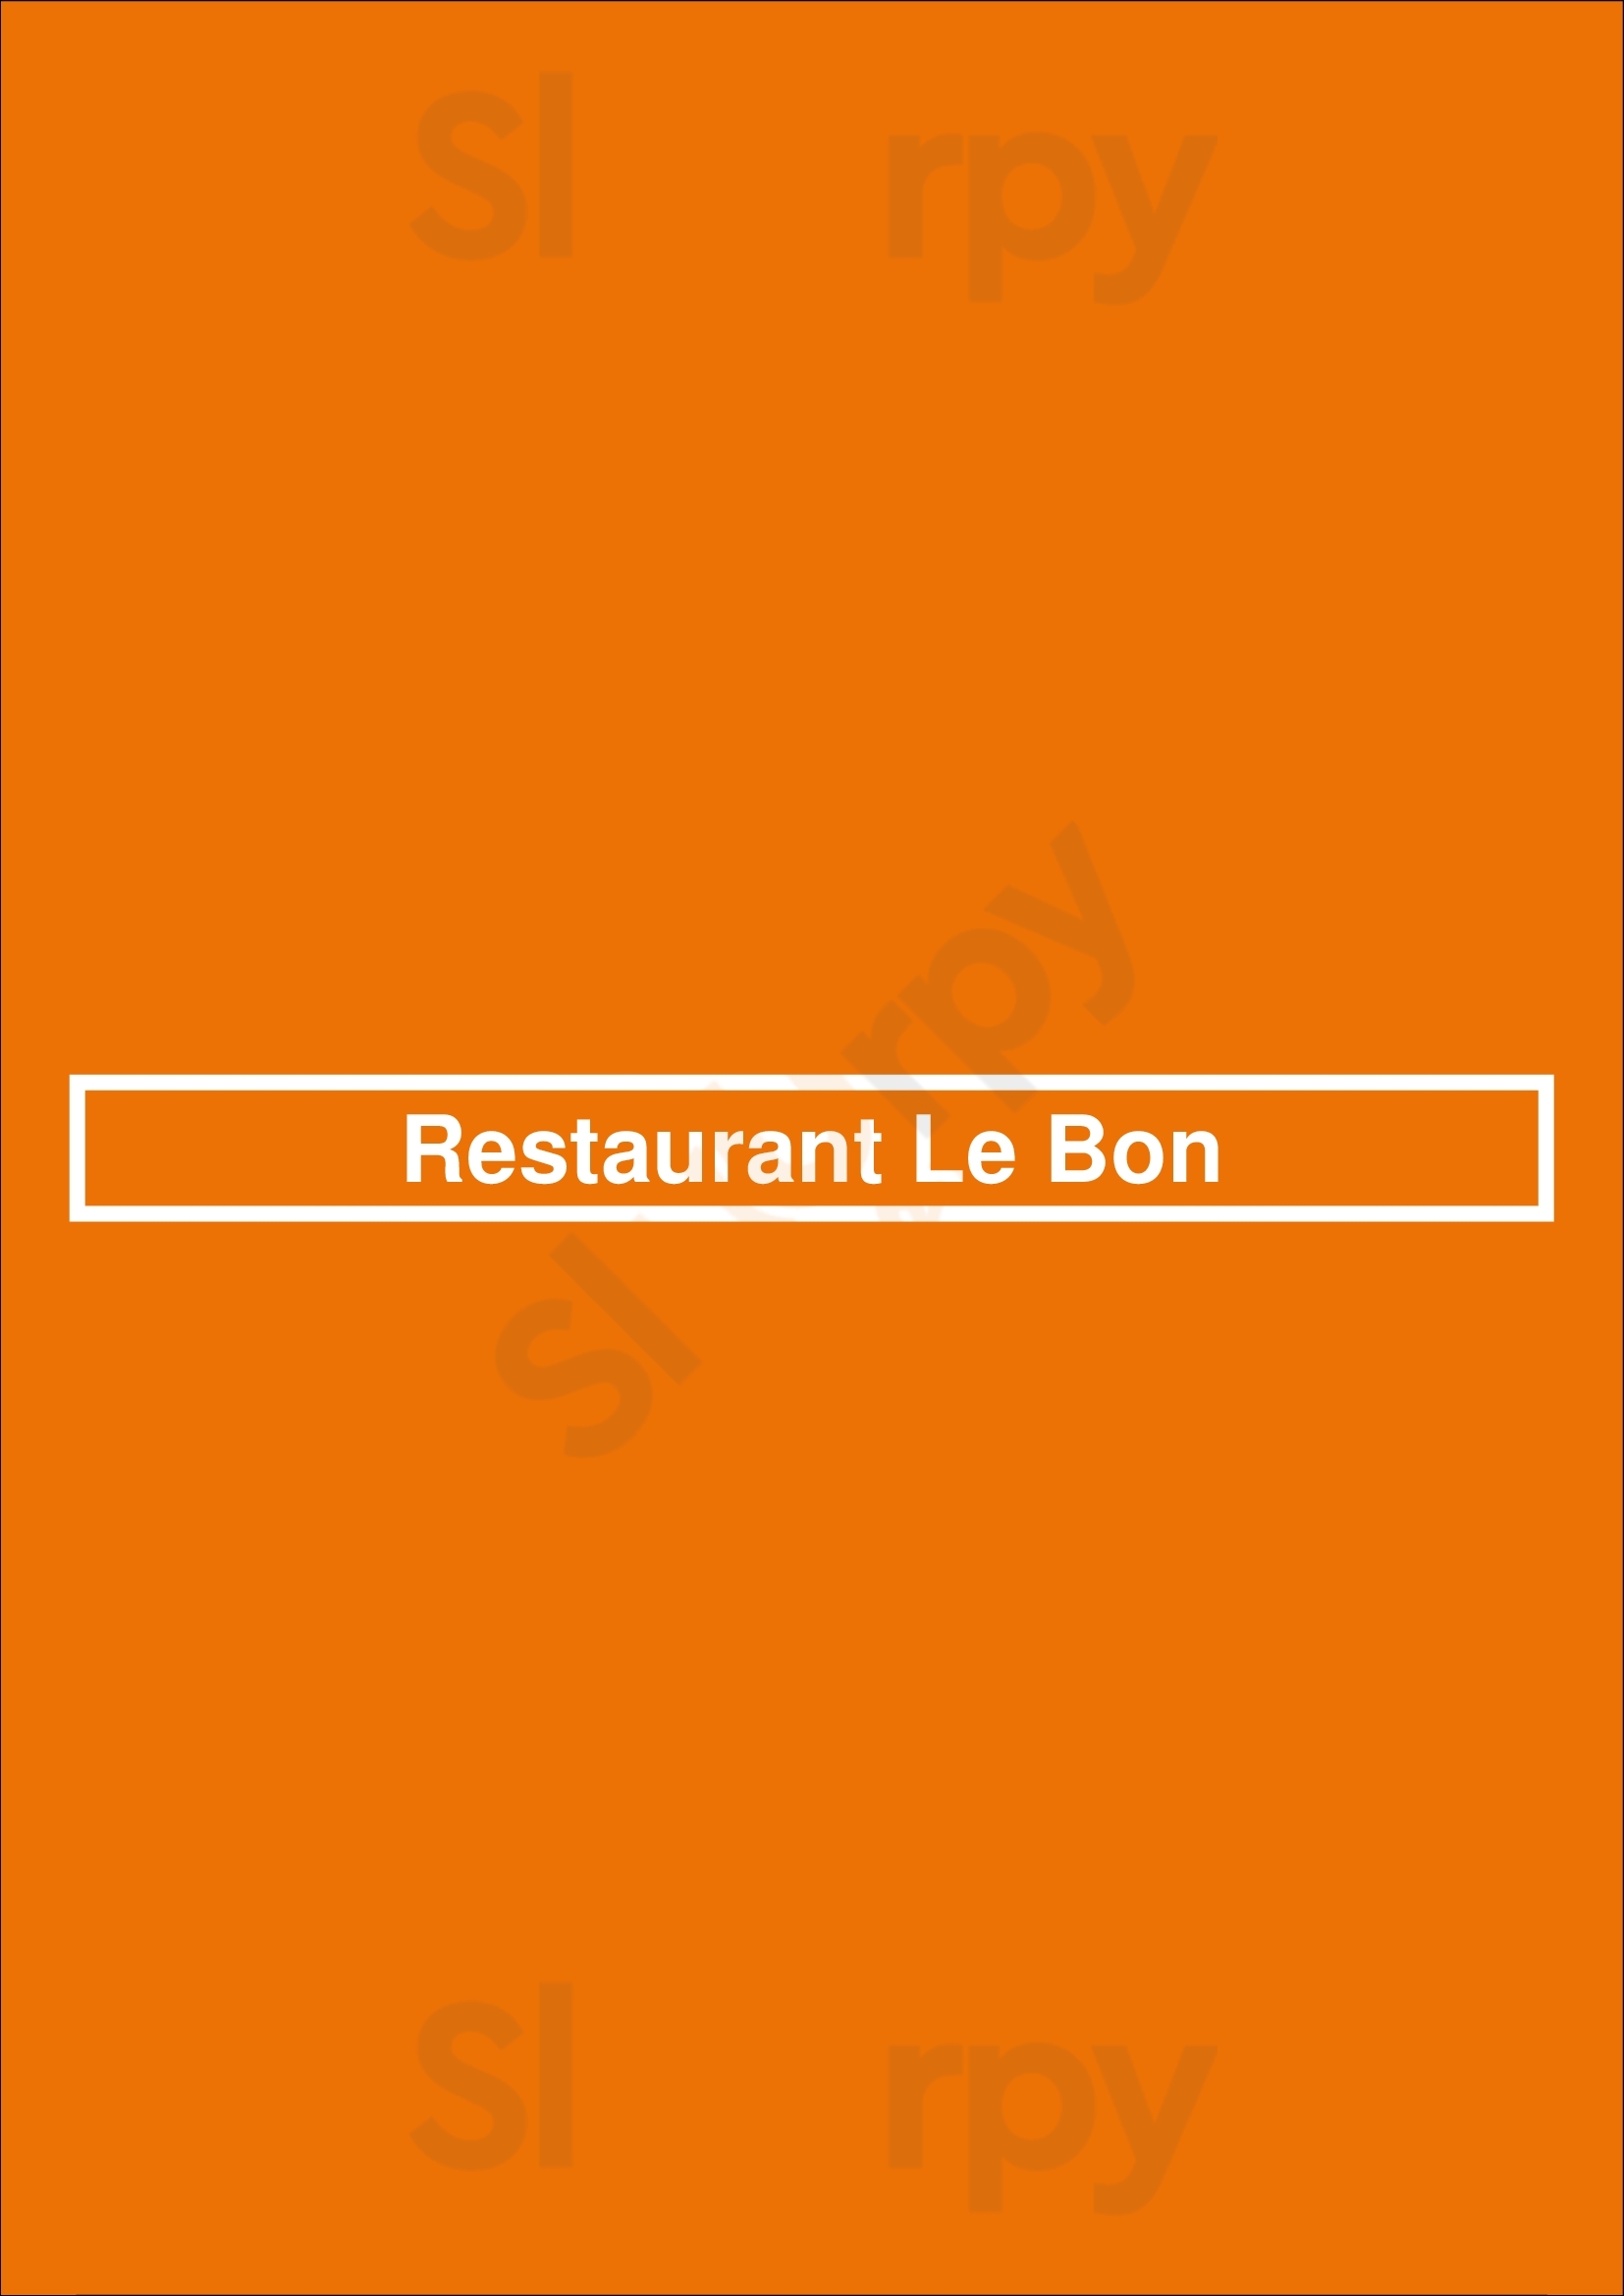 Restaurant Le Bon Alkmaar Menu - 1